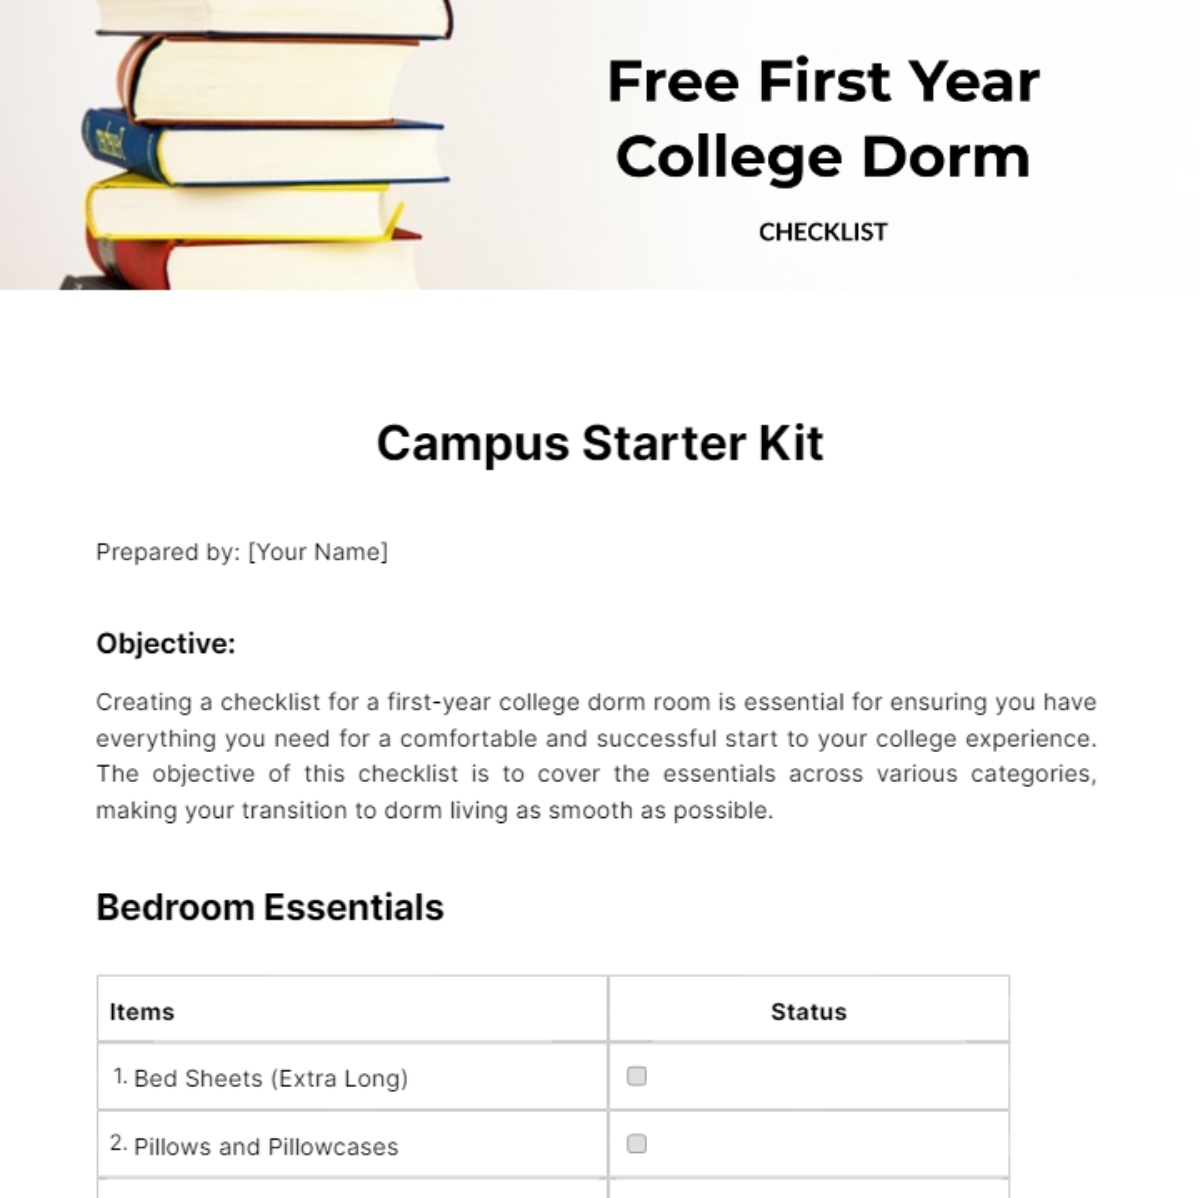 Free First Year College Dorm Checklist Template